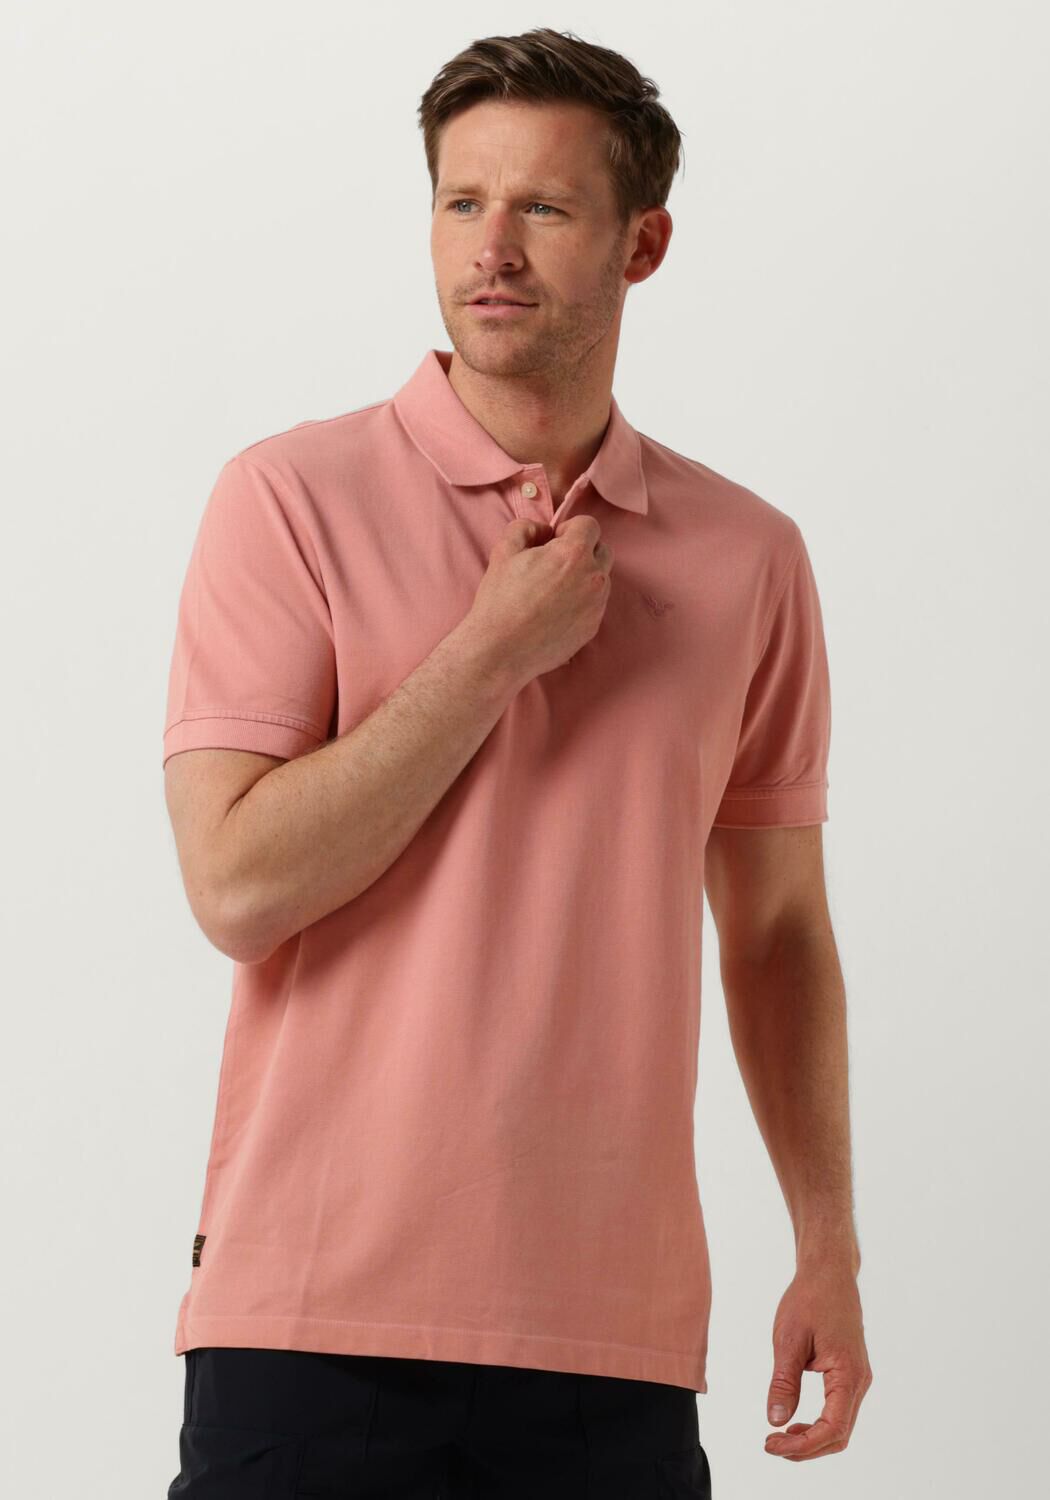 PME LEGEND Heren Polo's & T-shirts Short Sleeve Polo Pique Garment Dye Roze